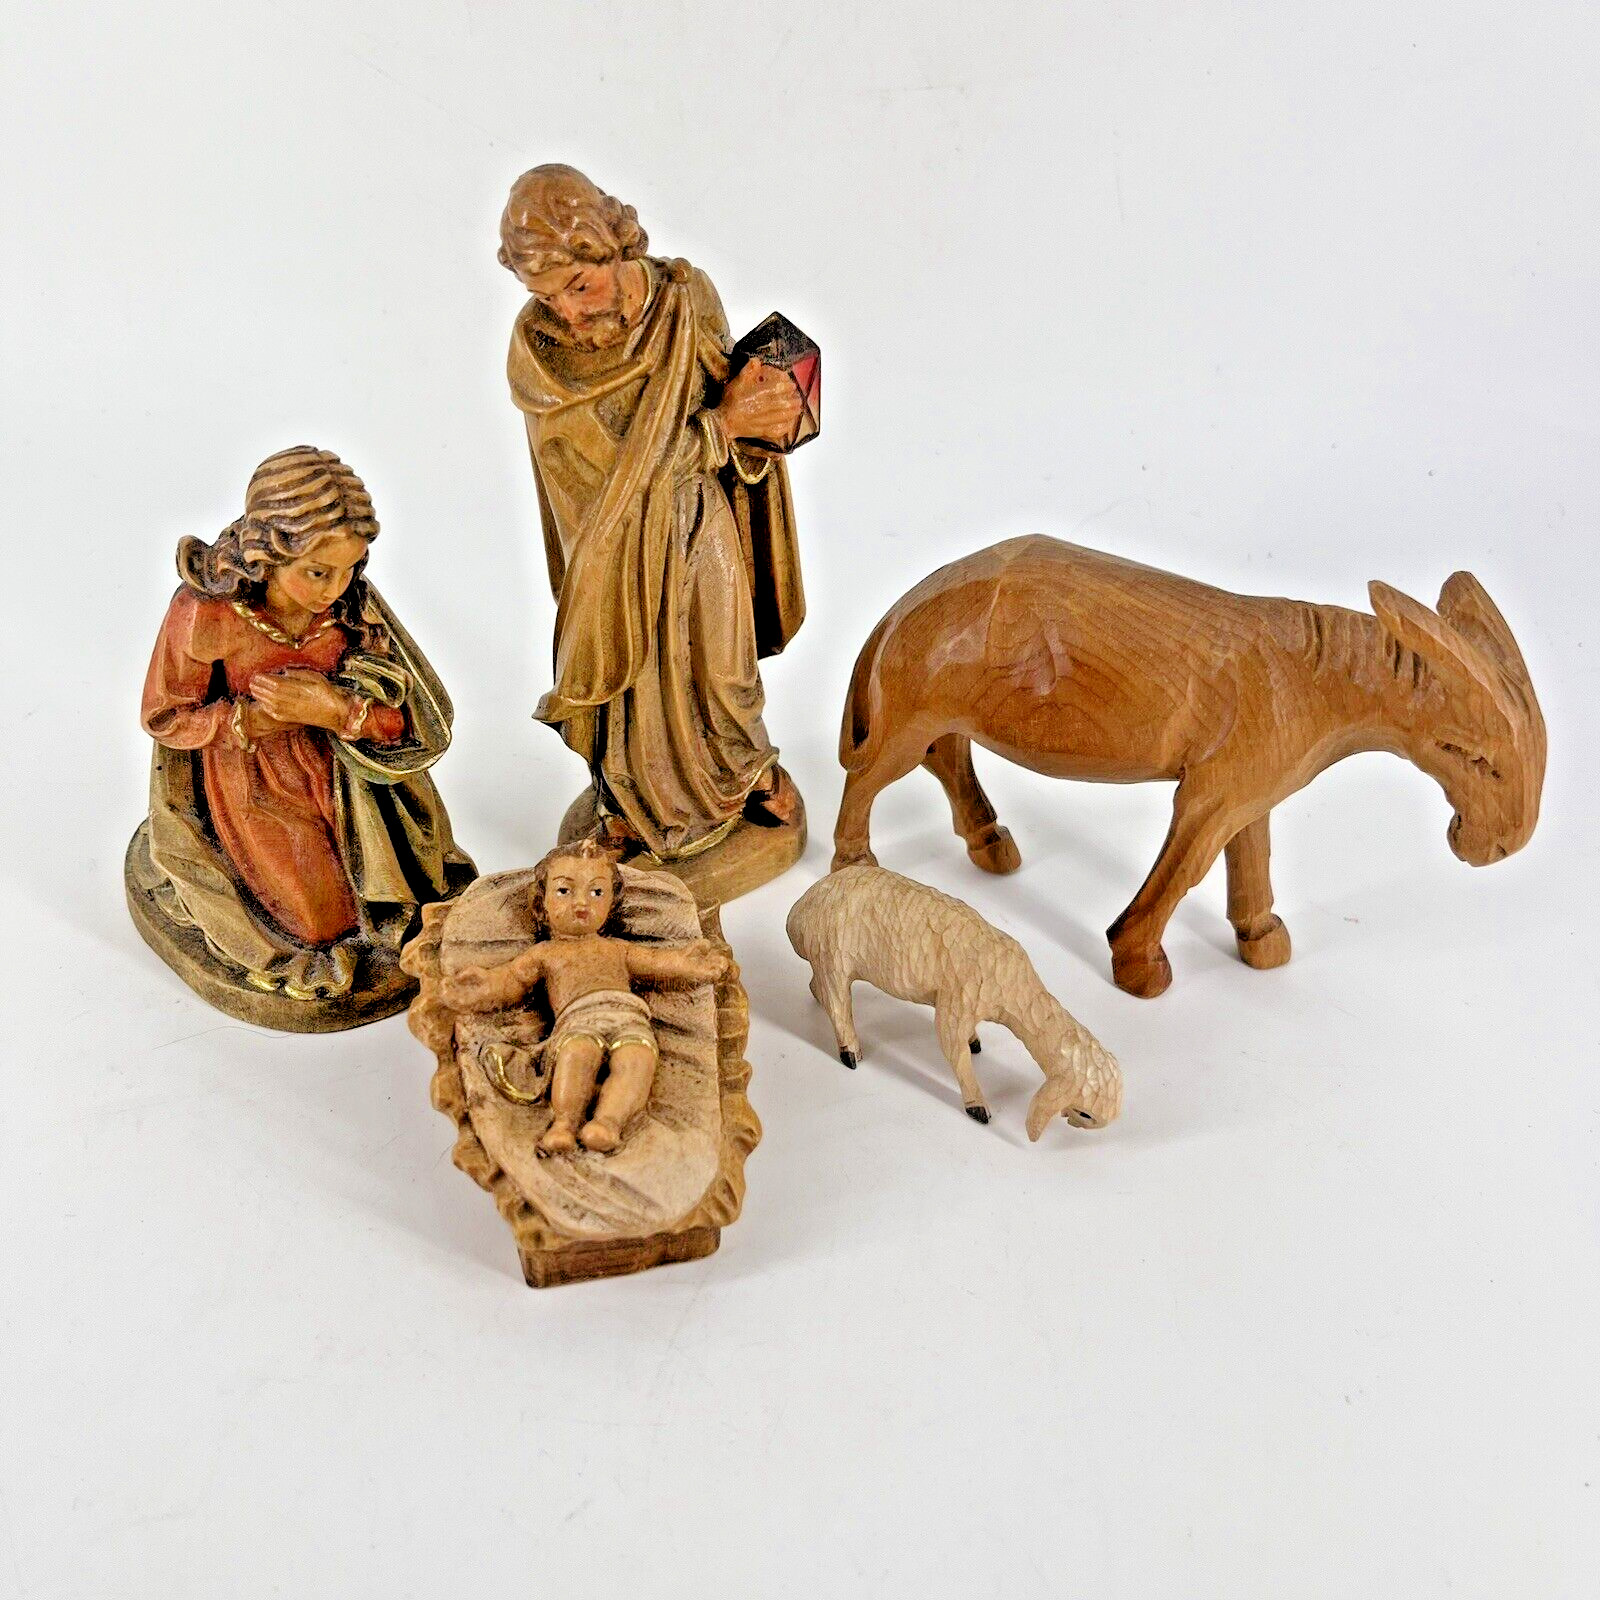 Vintage Maeder Lucerne Switzerland Hand Carved Wood Wooden Nativity Scene Set 5